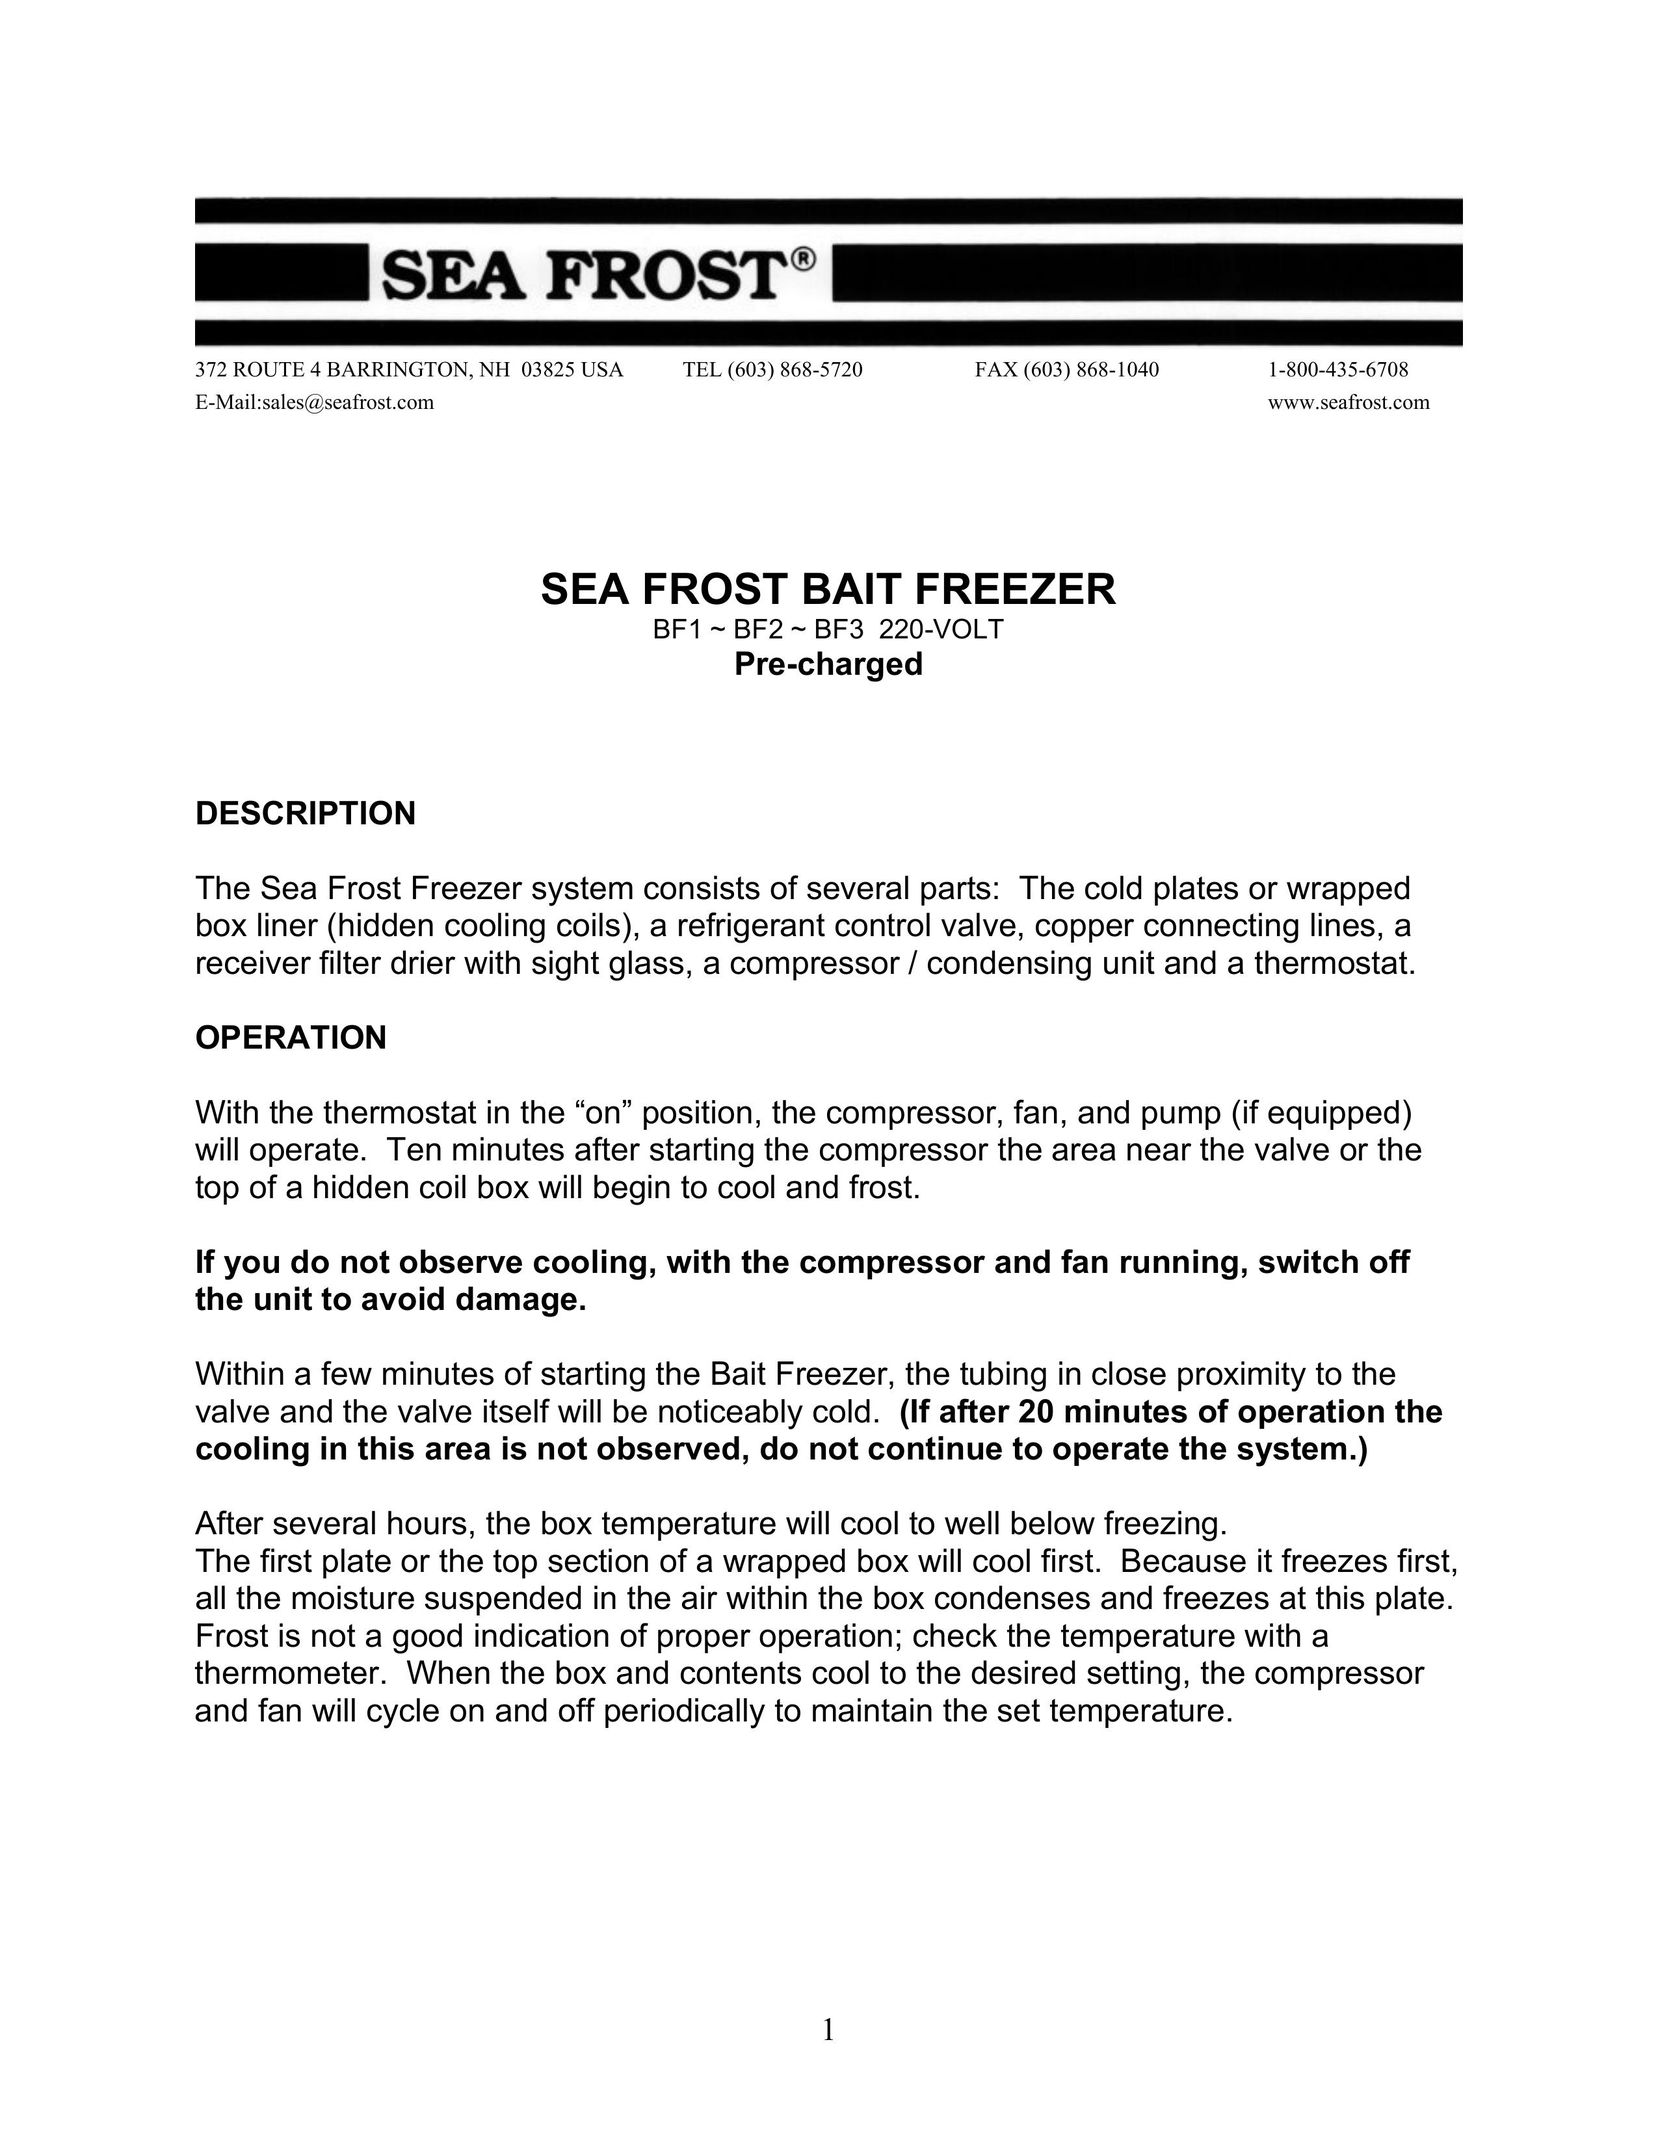 Sea Frost Bait Freezer Freezer User Manual